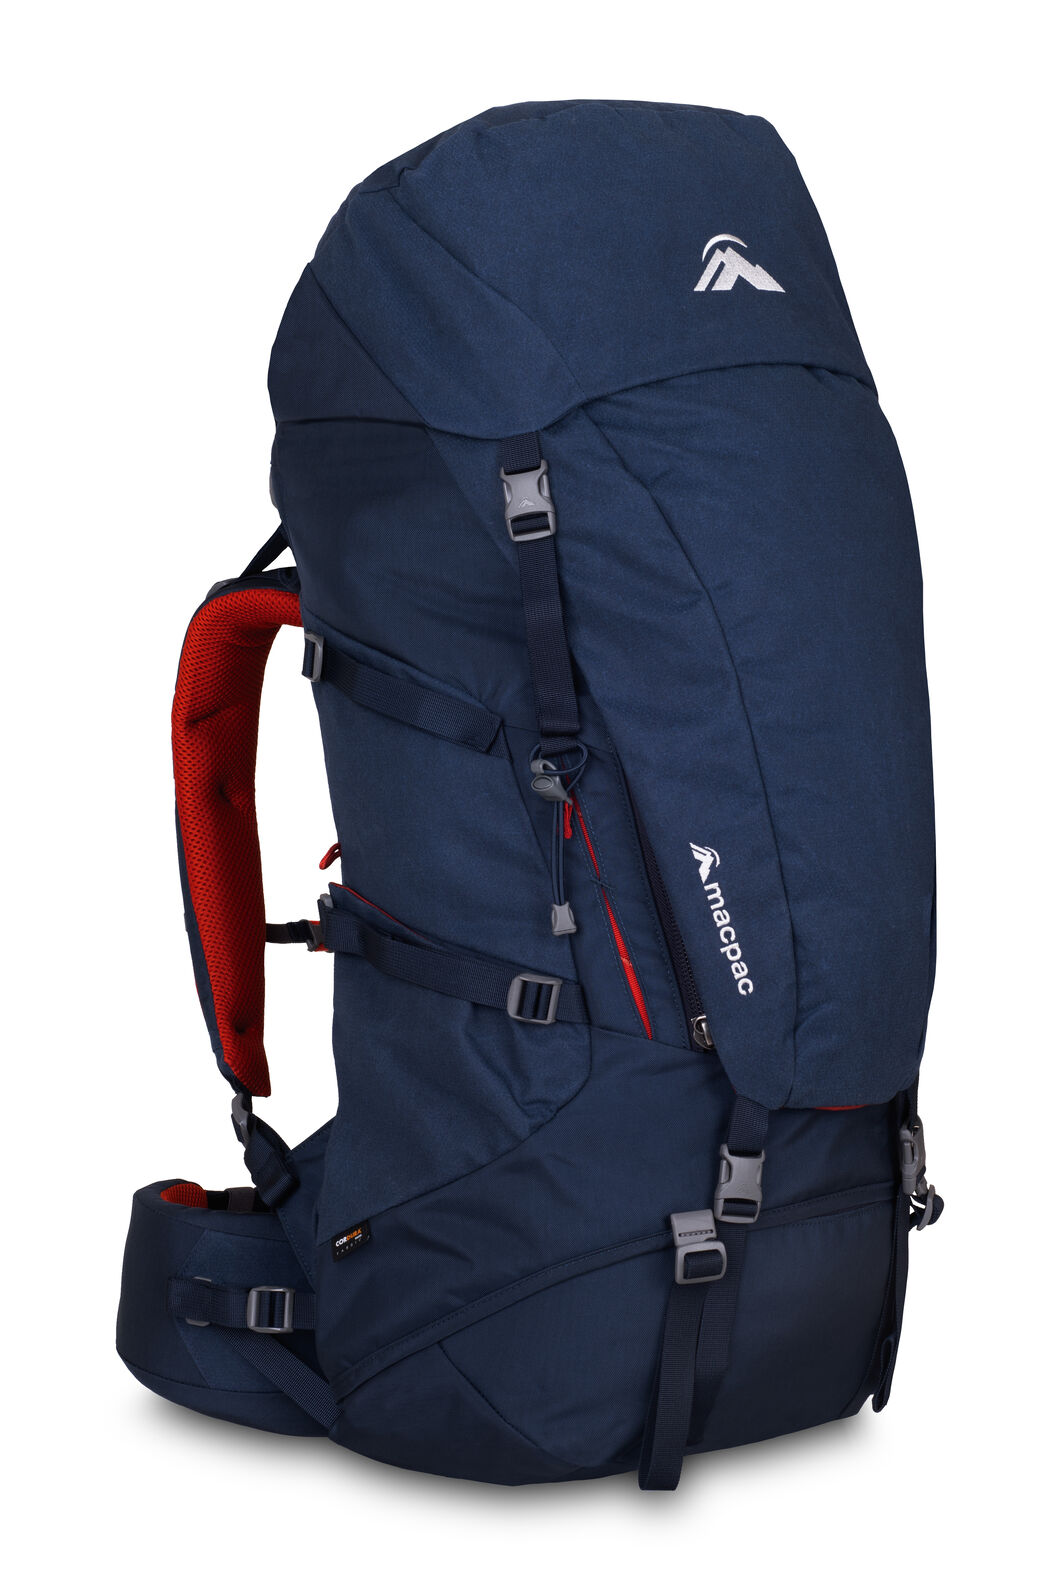 Macpac Torlesse AzTec® Front Zip 65L Hiking Backpack, Black Iris, hi-res